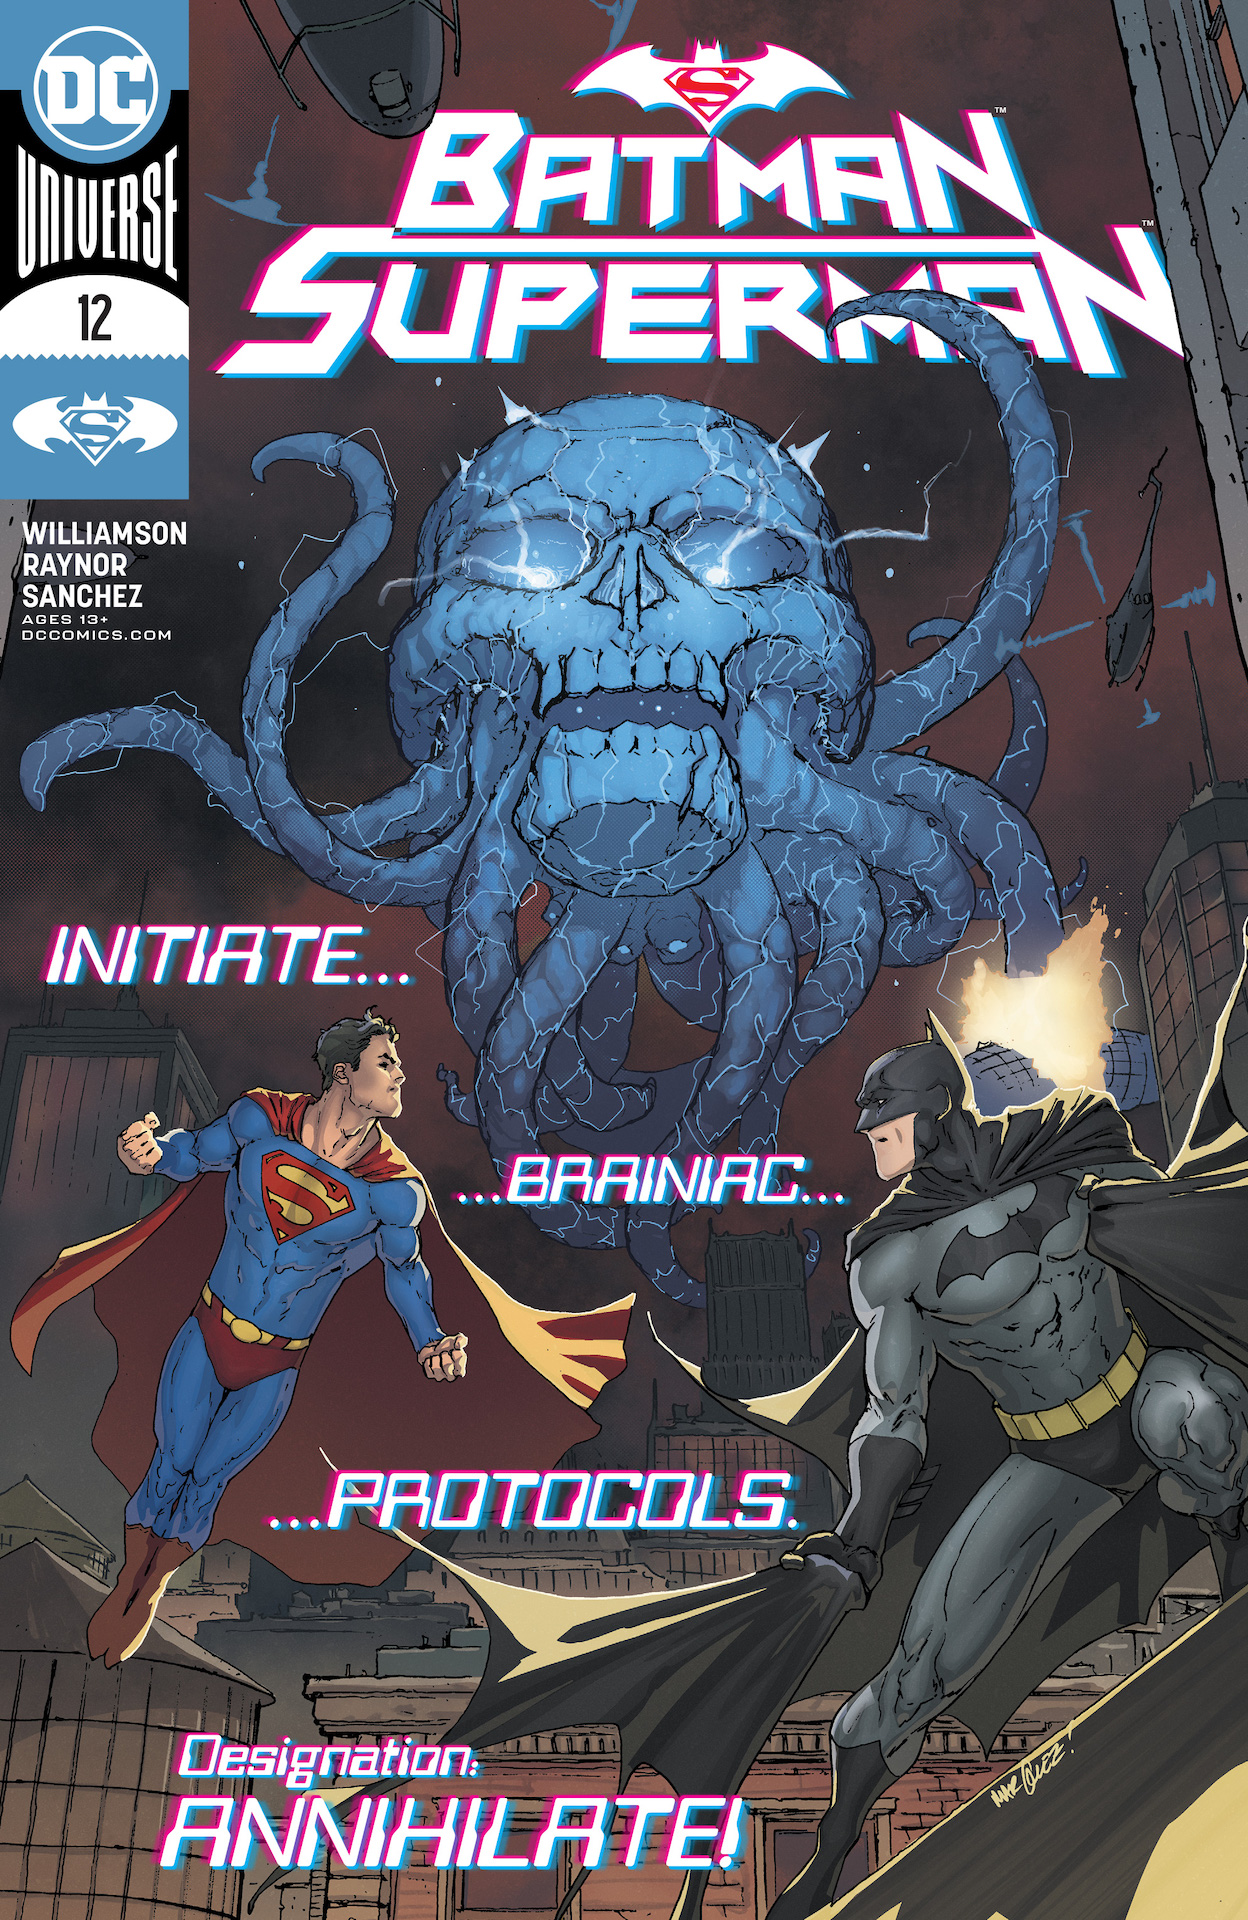 DC Preview: Batman/Superman #12